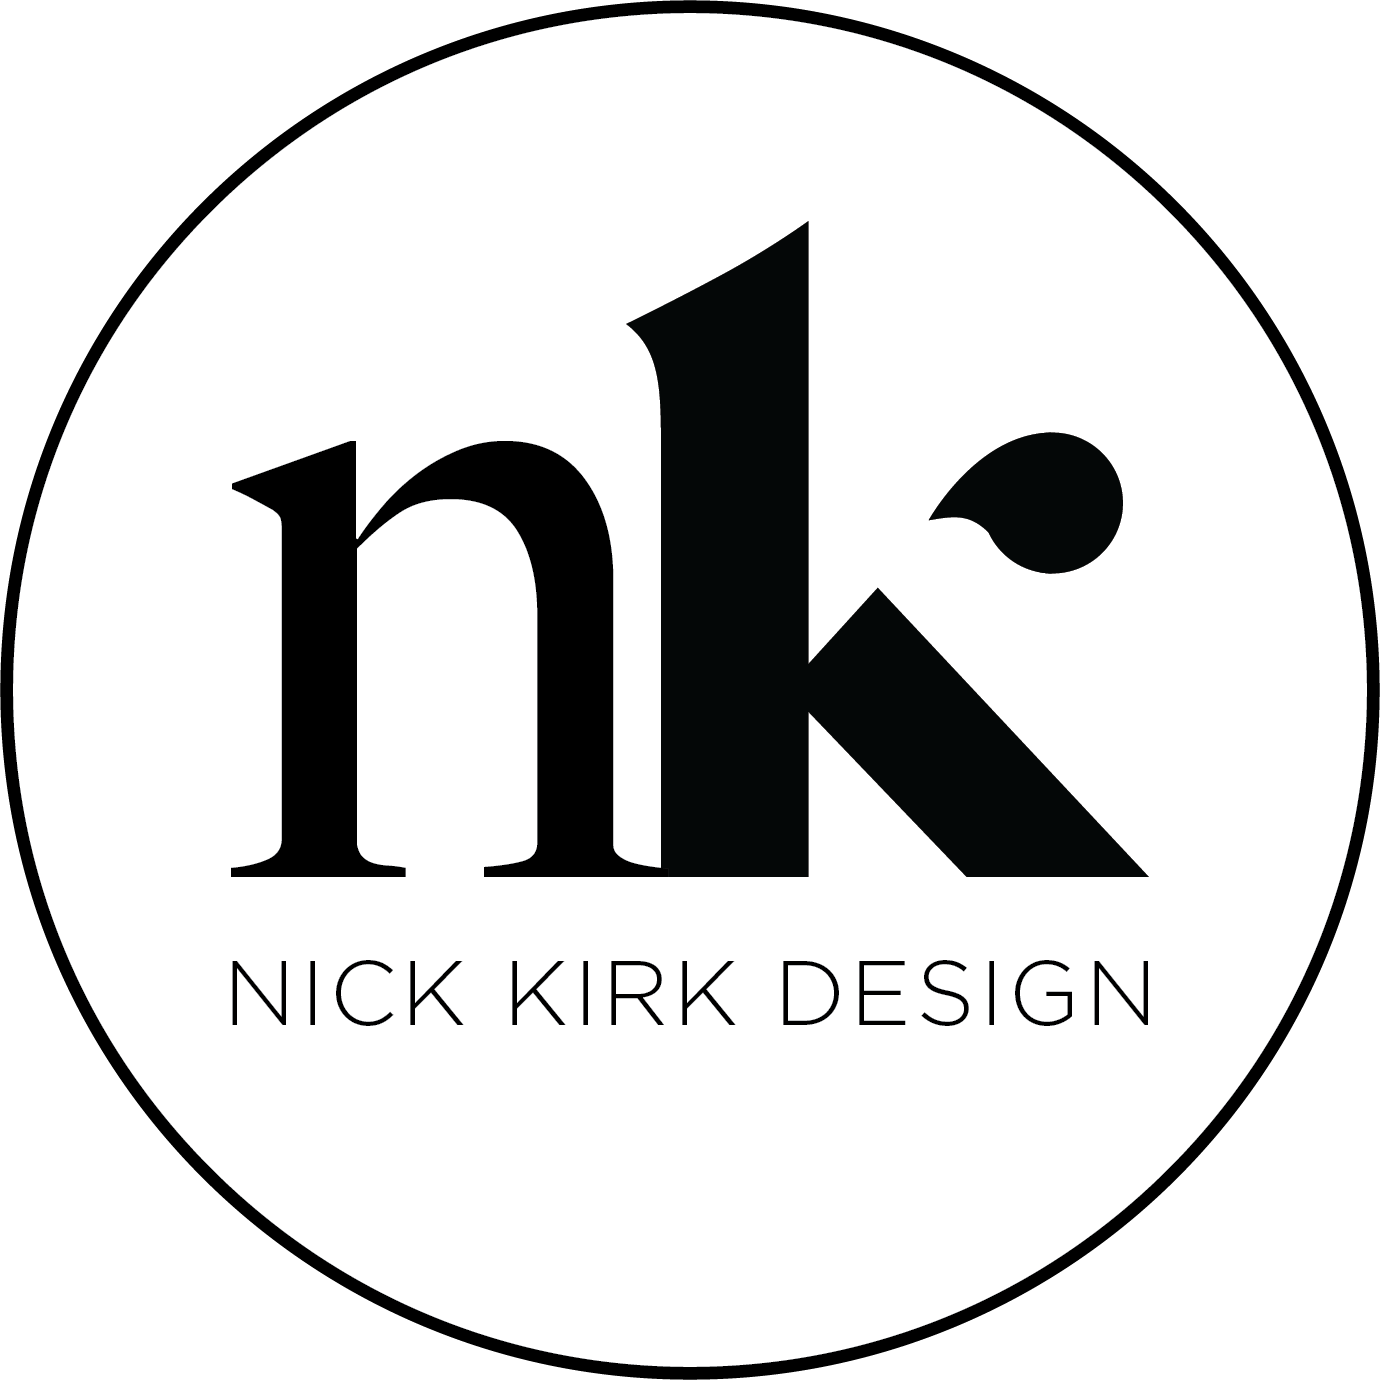 Nick Kirk Design